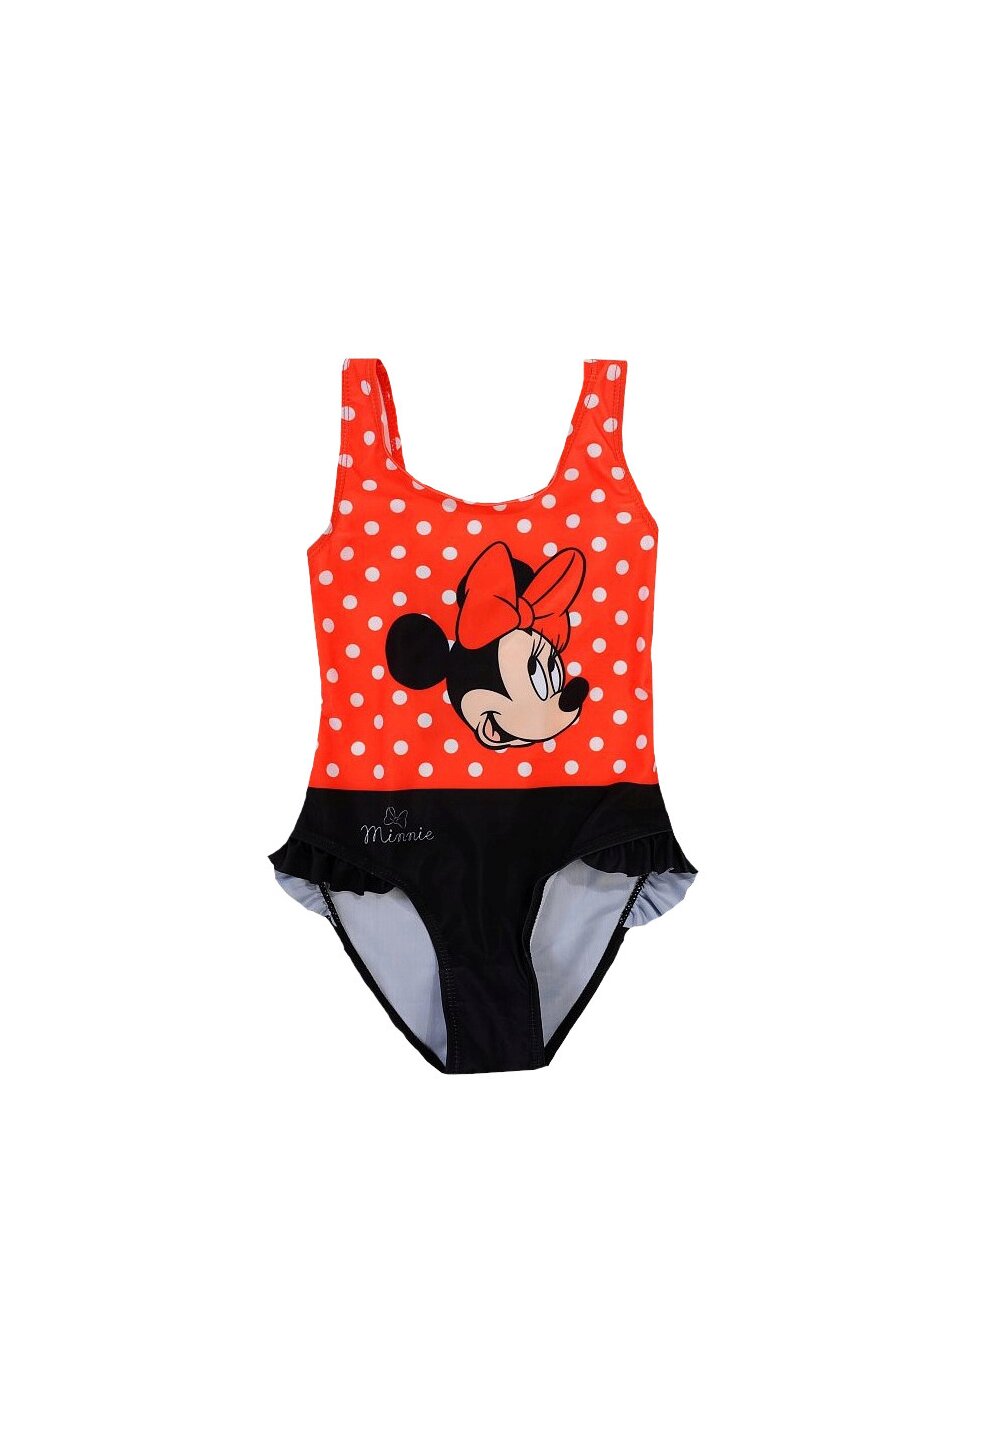 Costum de baie intreg, Minnie Mouse, rosu cu buline